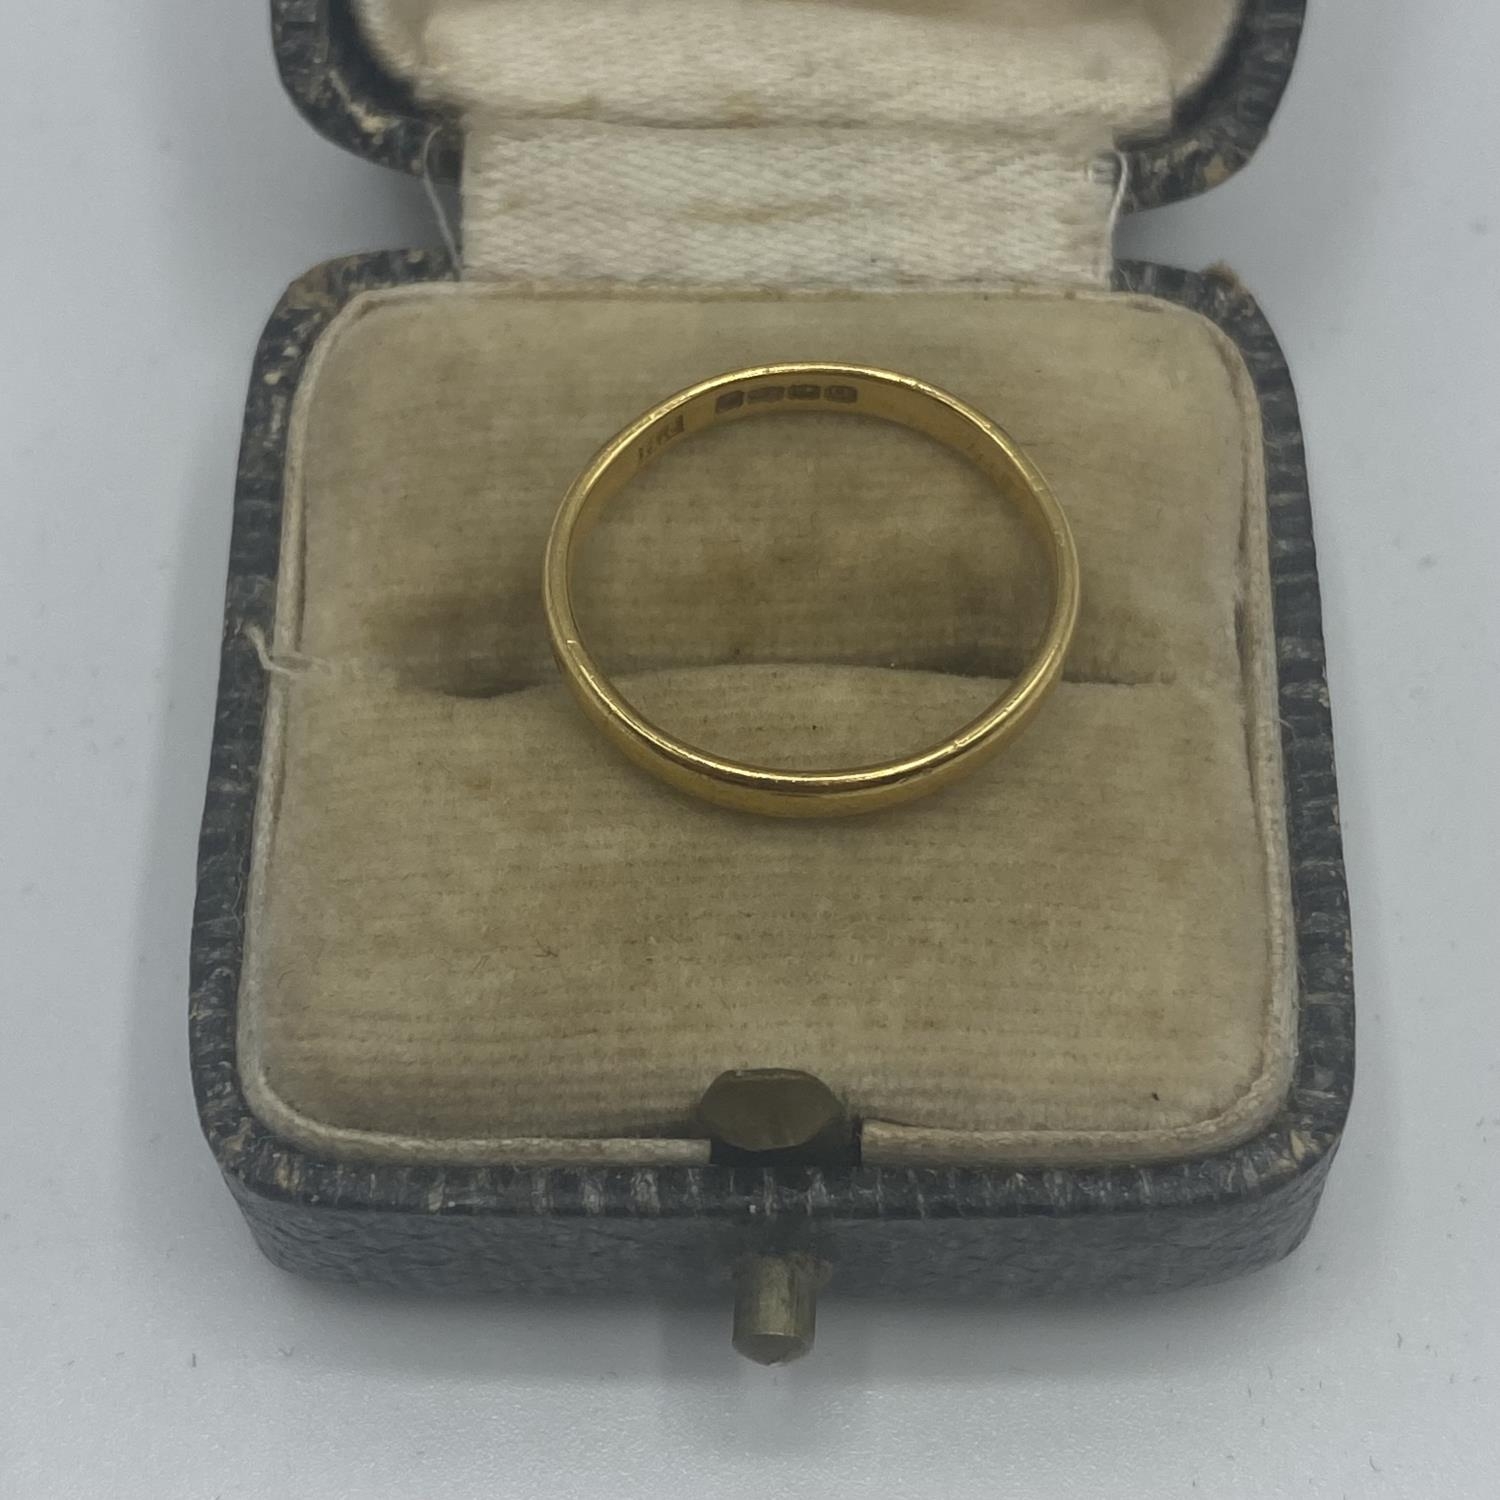 A 22ct gold wedding band, 1.95 size I - Image 2 of 4